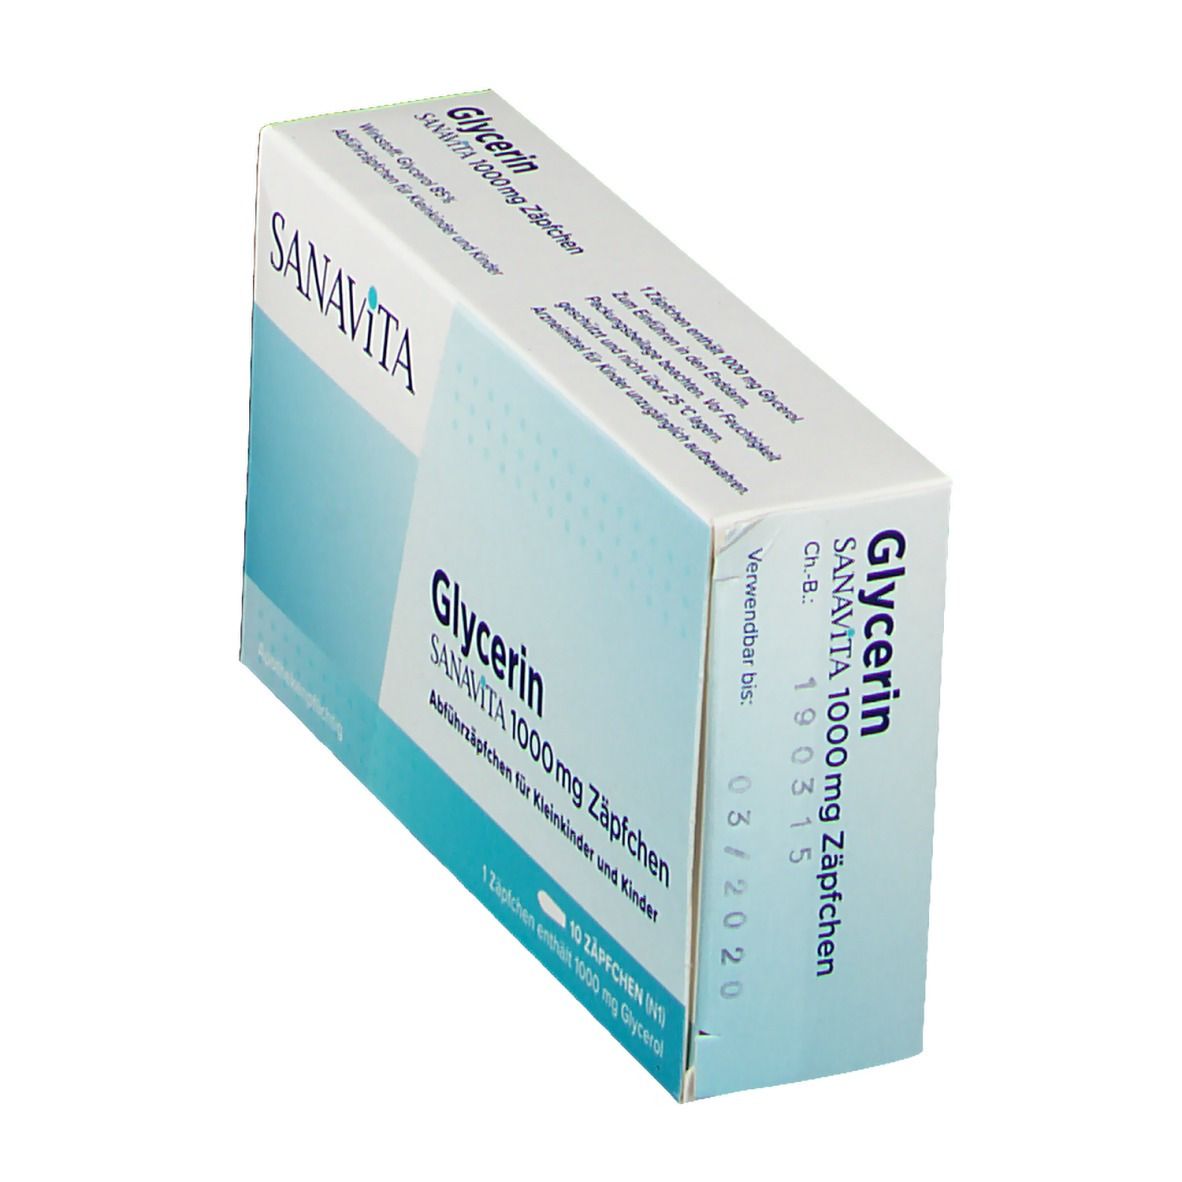 Glycerin Sanavita 1.000 mg Zäpfchen